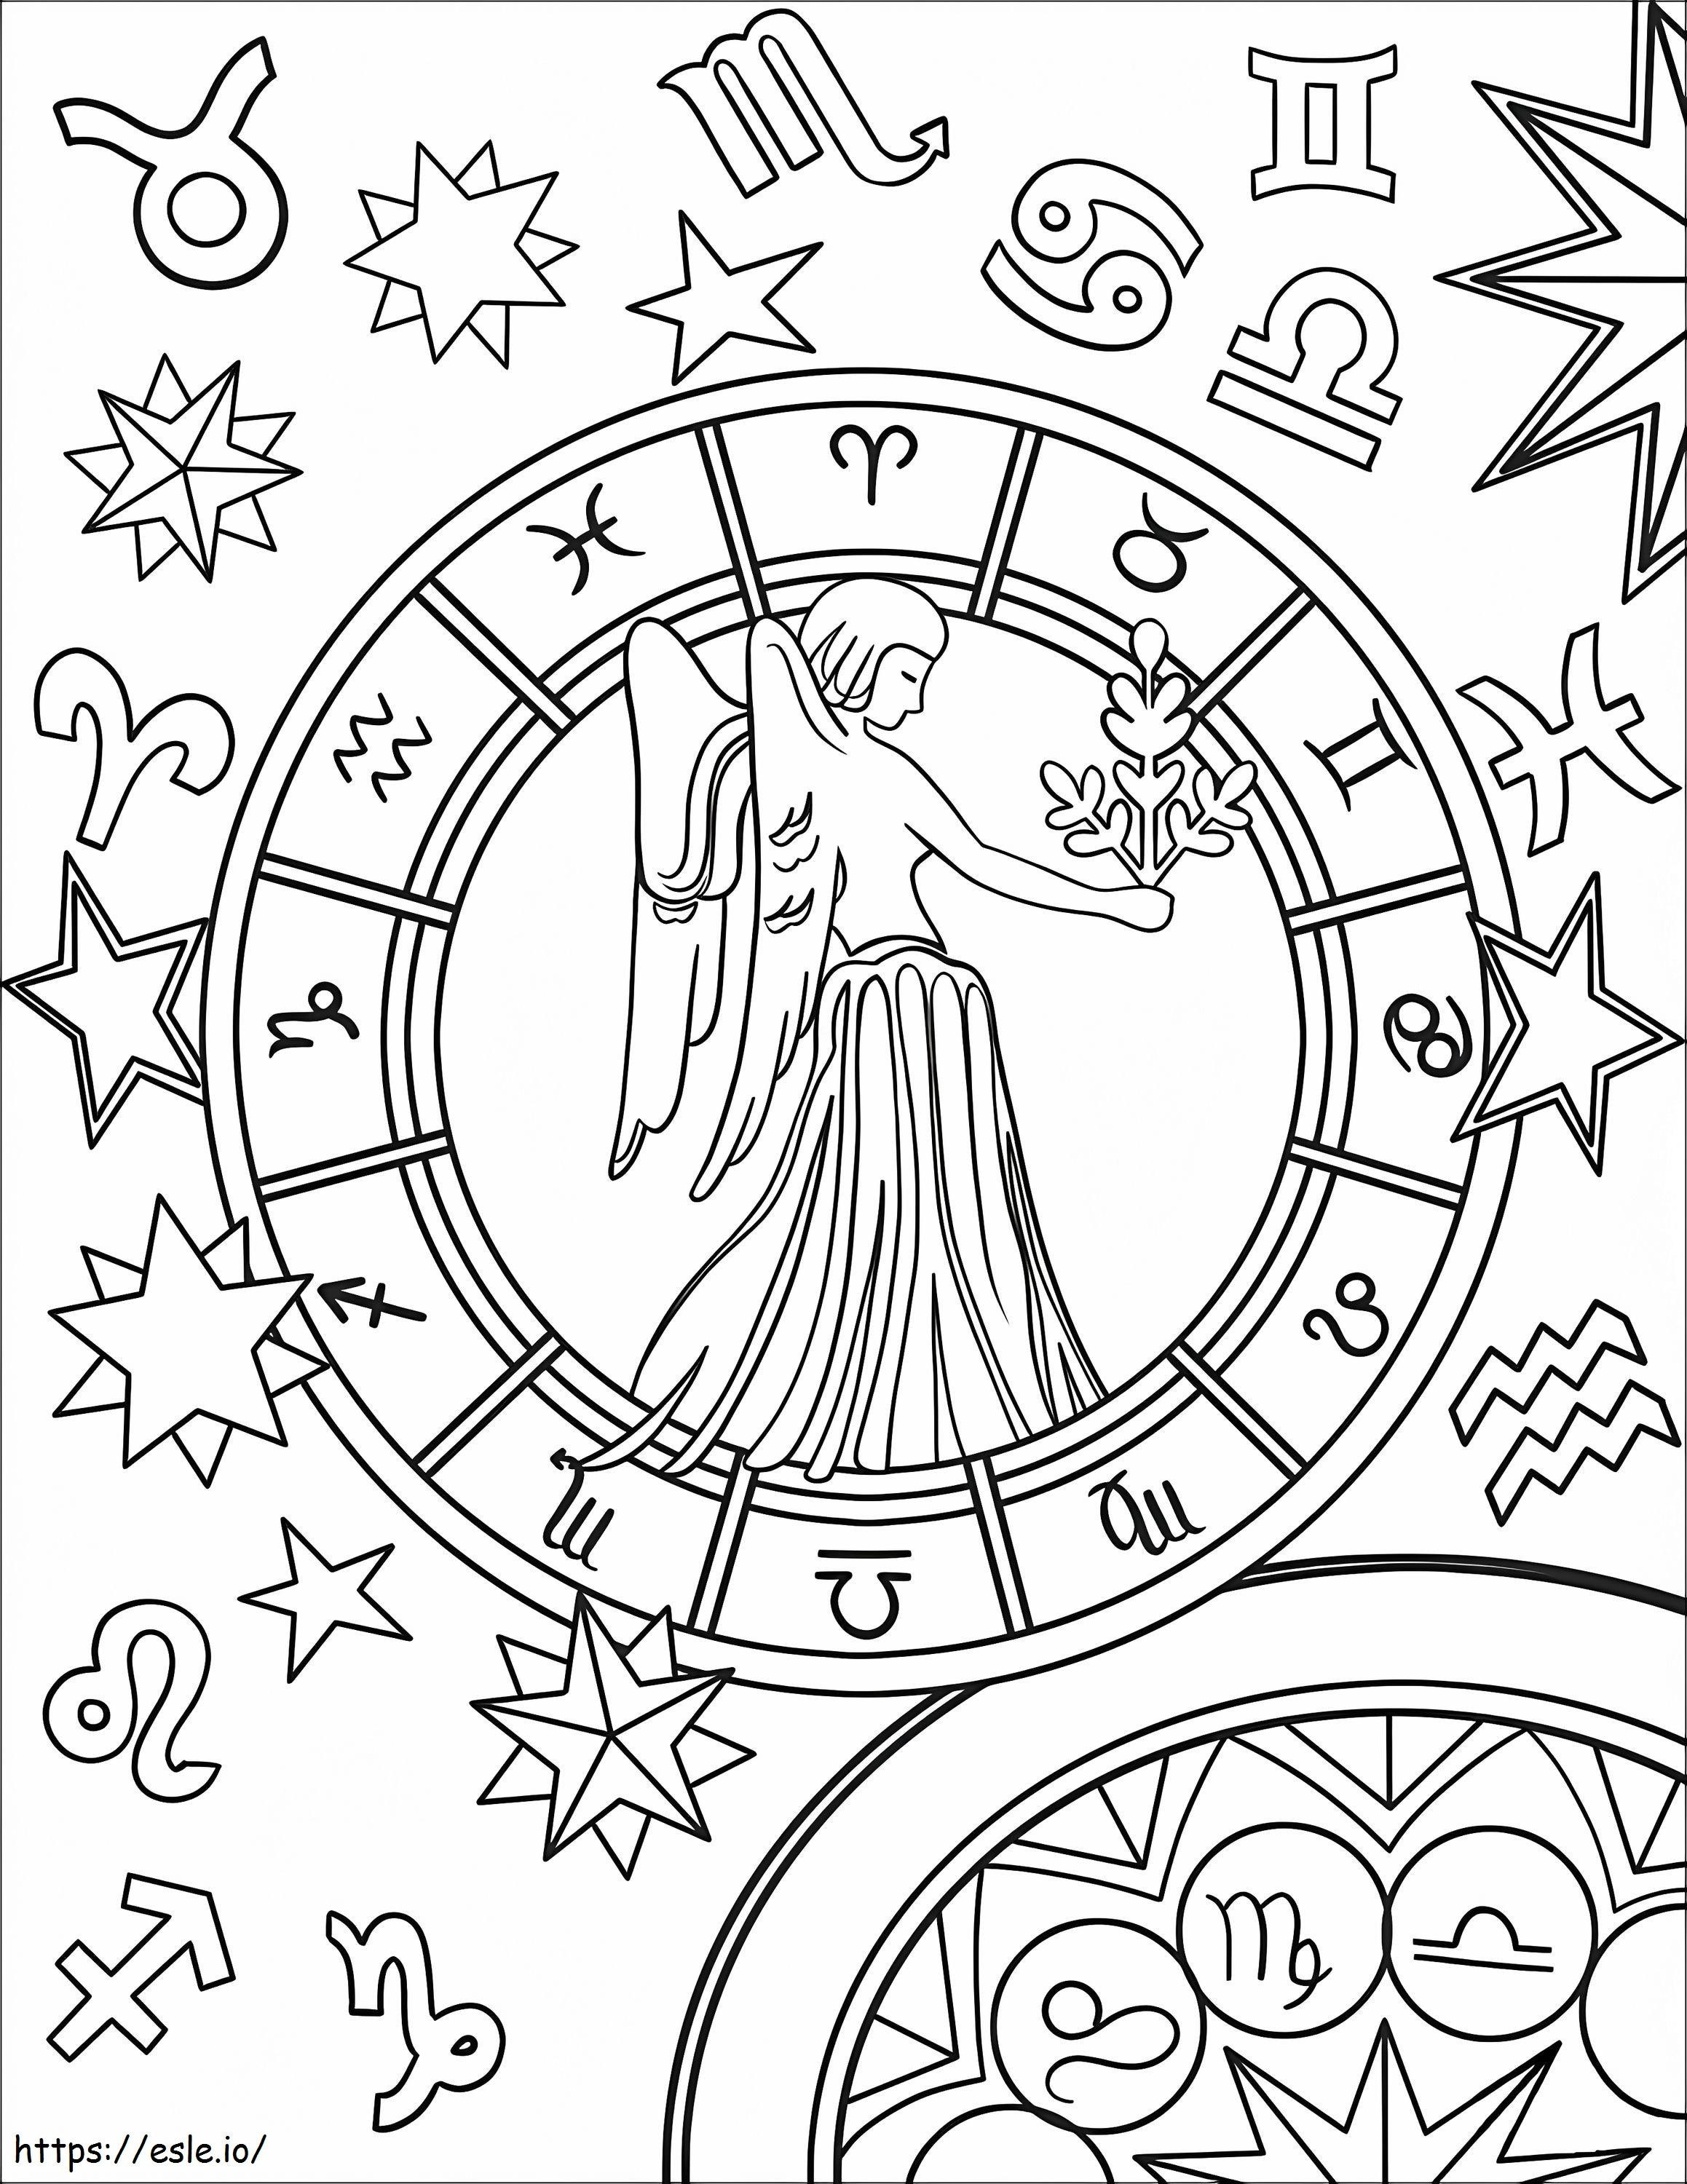 1597796322 Signo do Zodíaco de Virgem para colorir